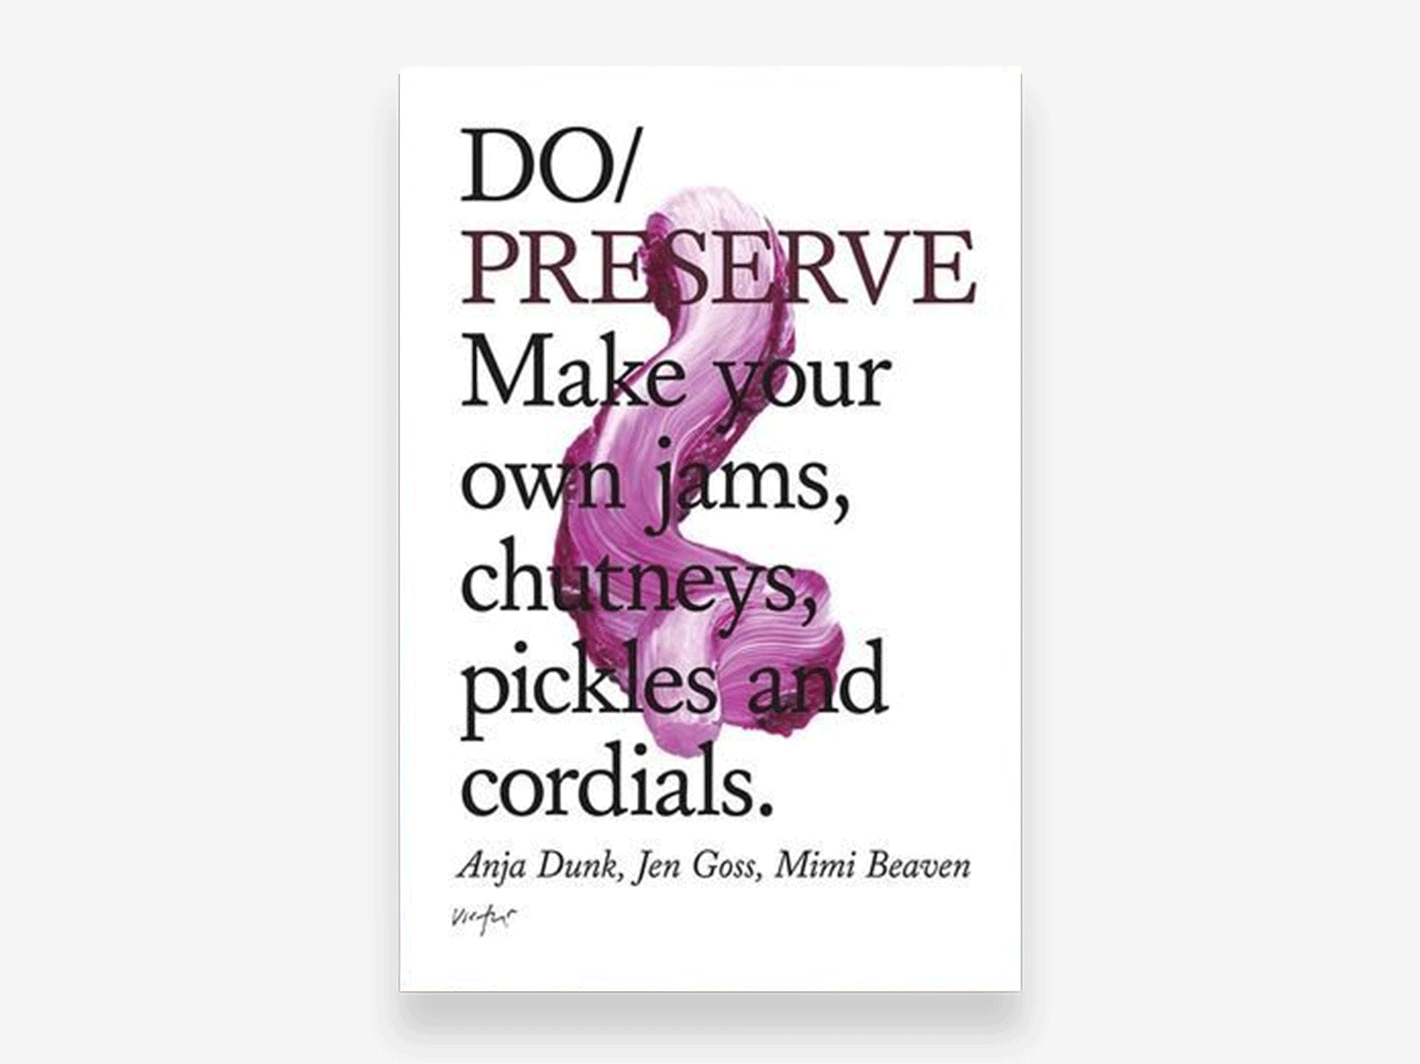 Do Preserve by Anja Dunk, Jen Goss, and Mimi Beaven